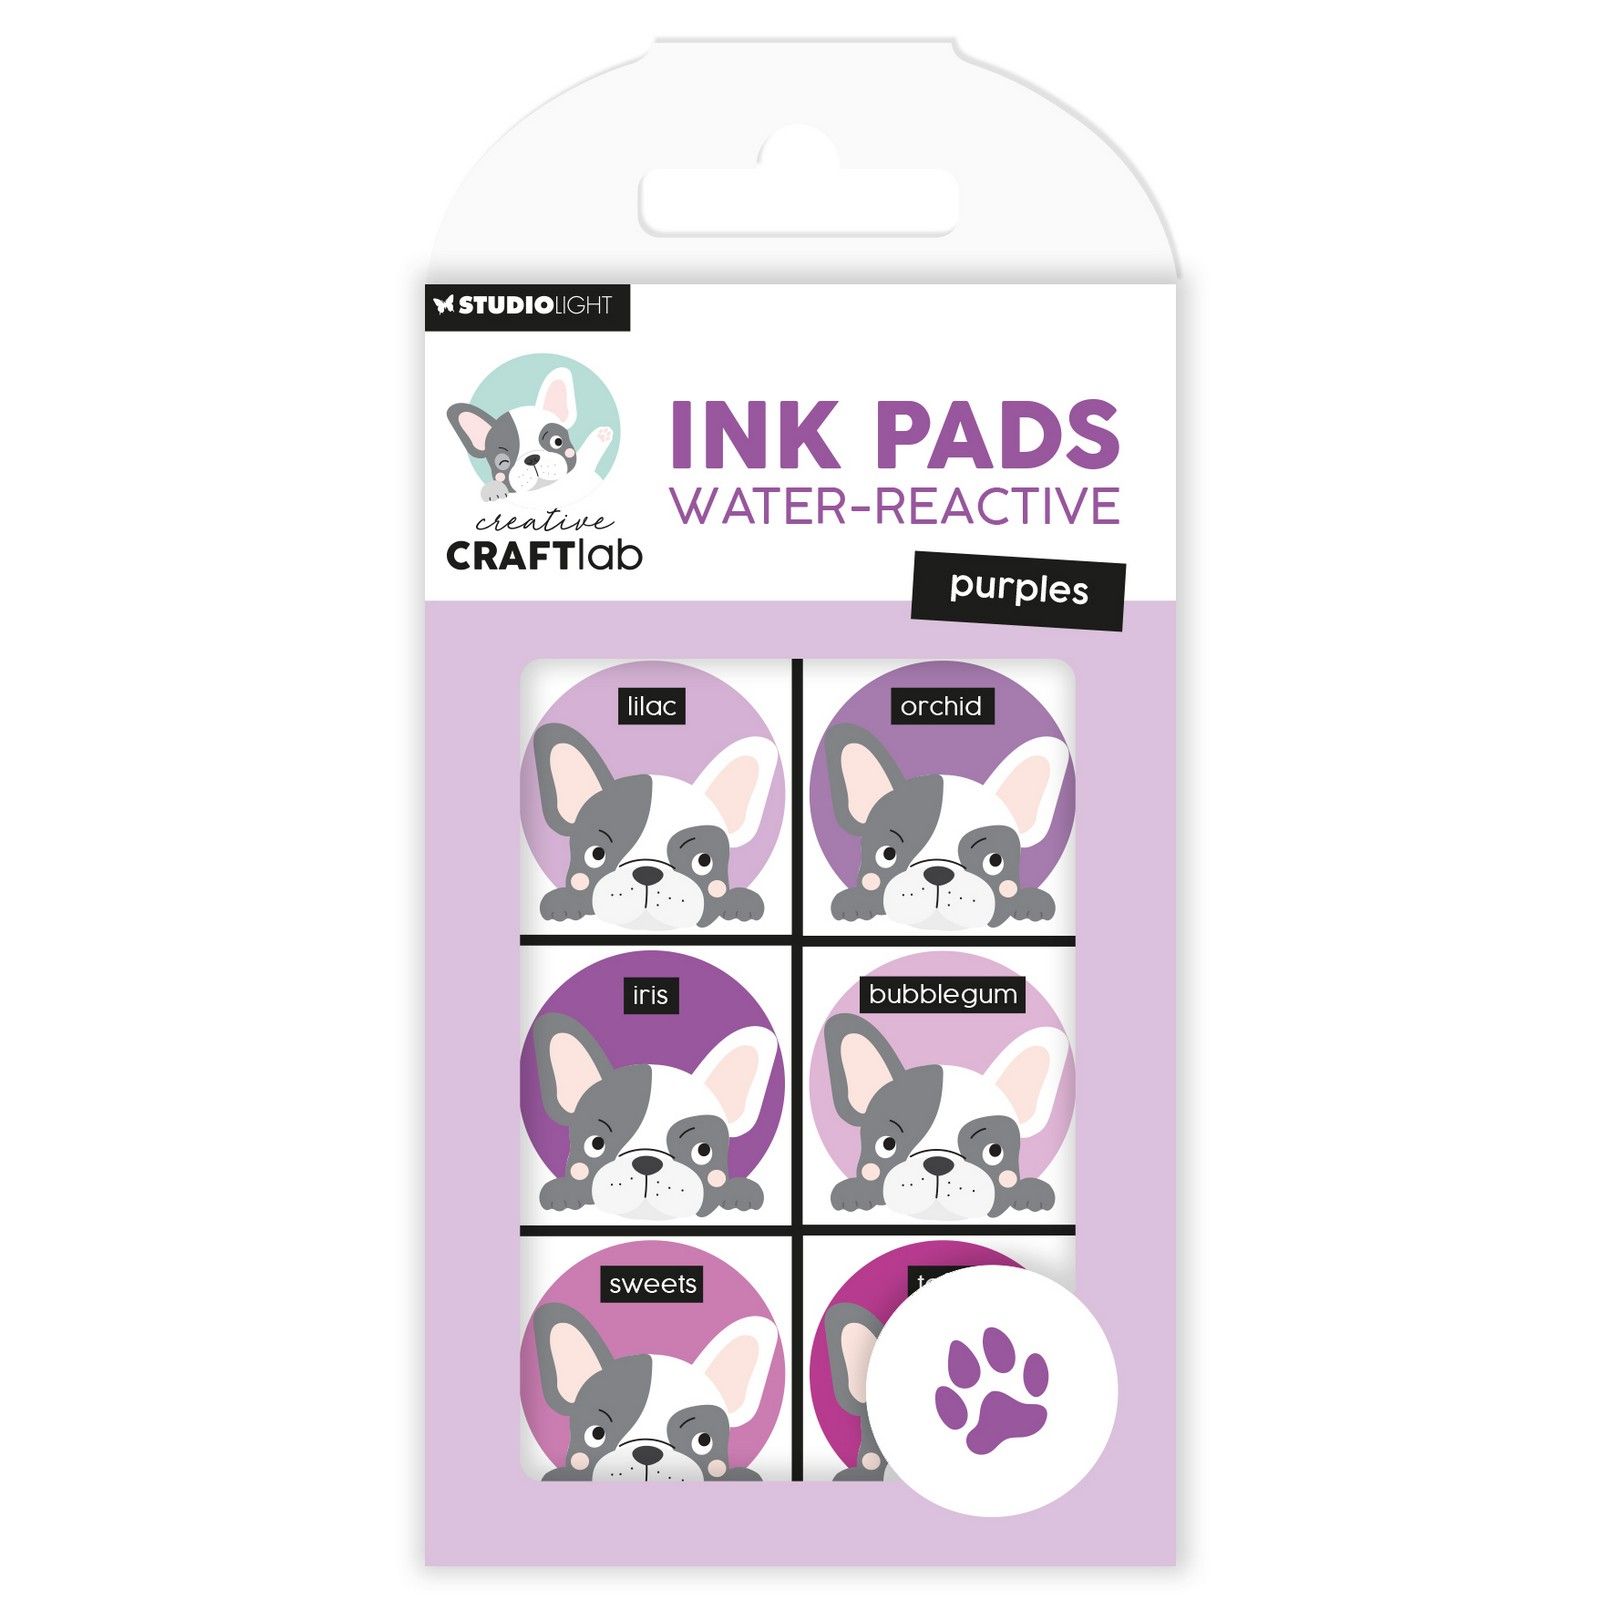 Creative Craftlab • Essentials Ink Pads Water-Reactive Purples